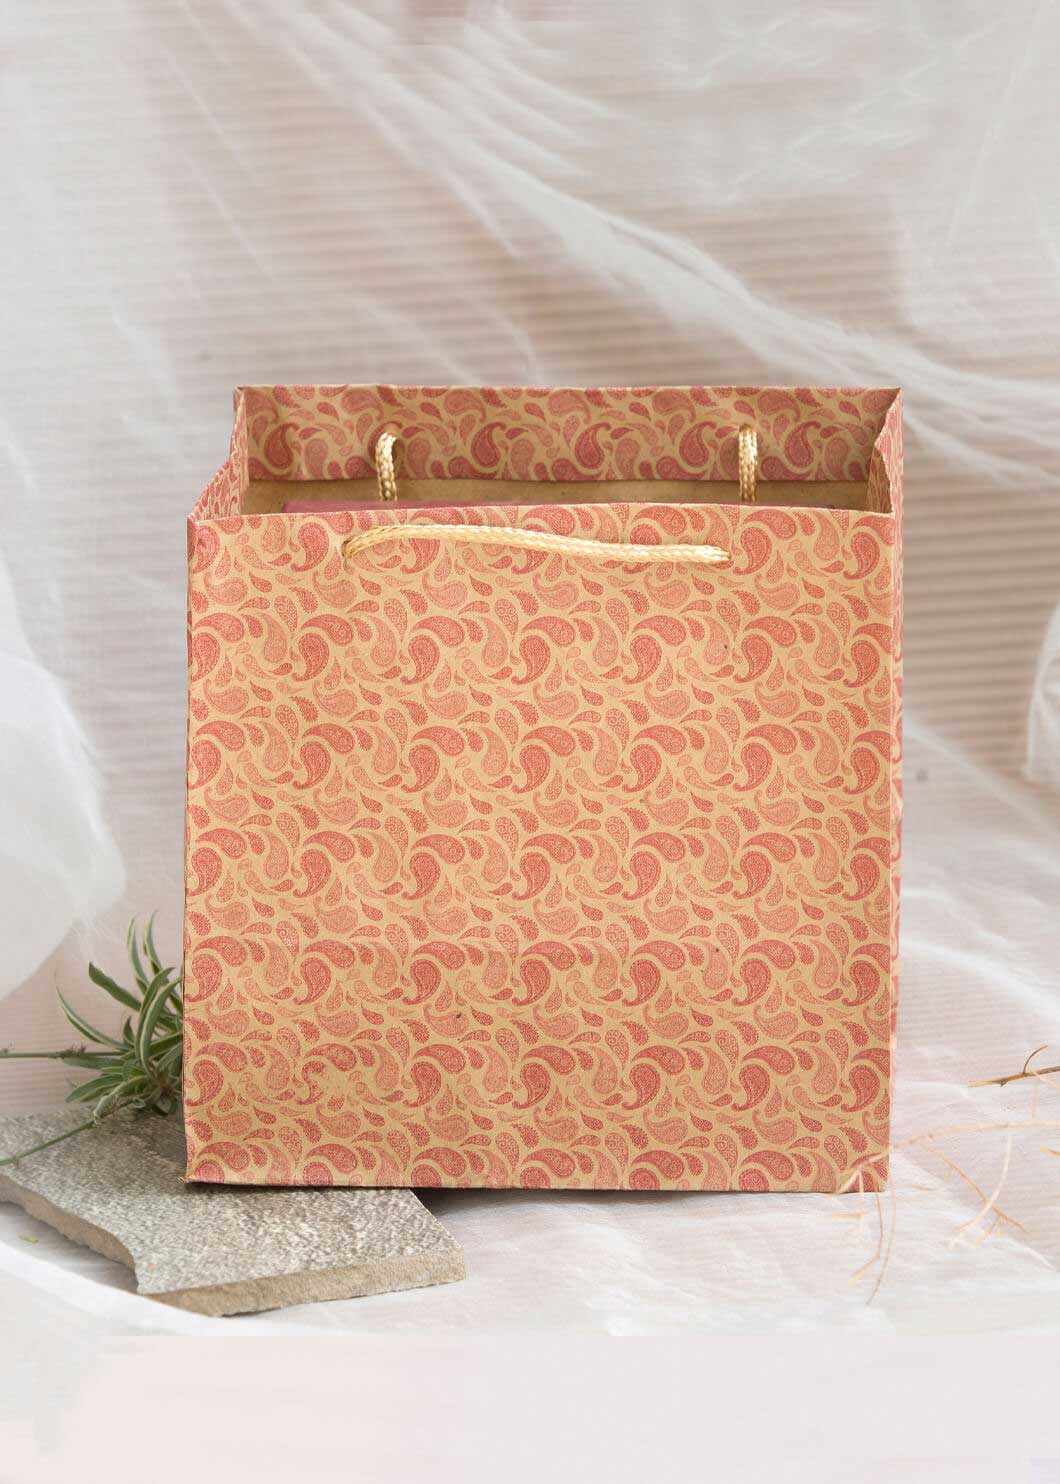 Craft Paper Bag Madala Pattern - Craft Bag - Golden Silver Red - 7x5 Paper Bag